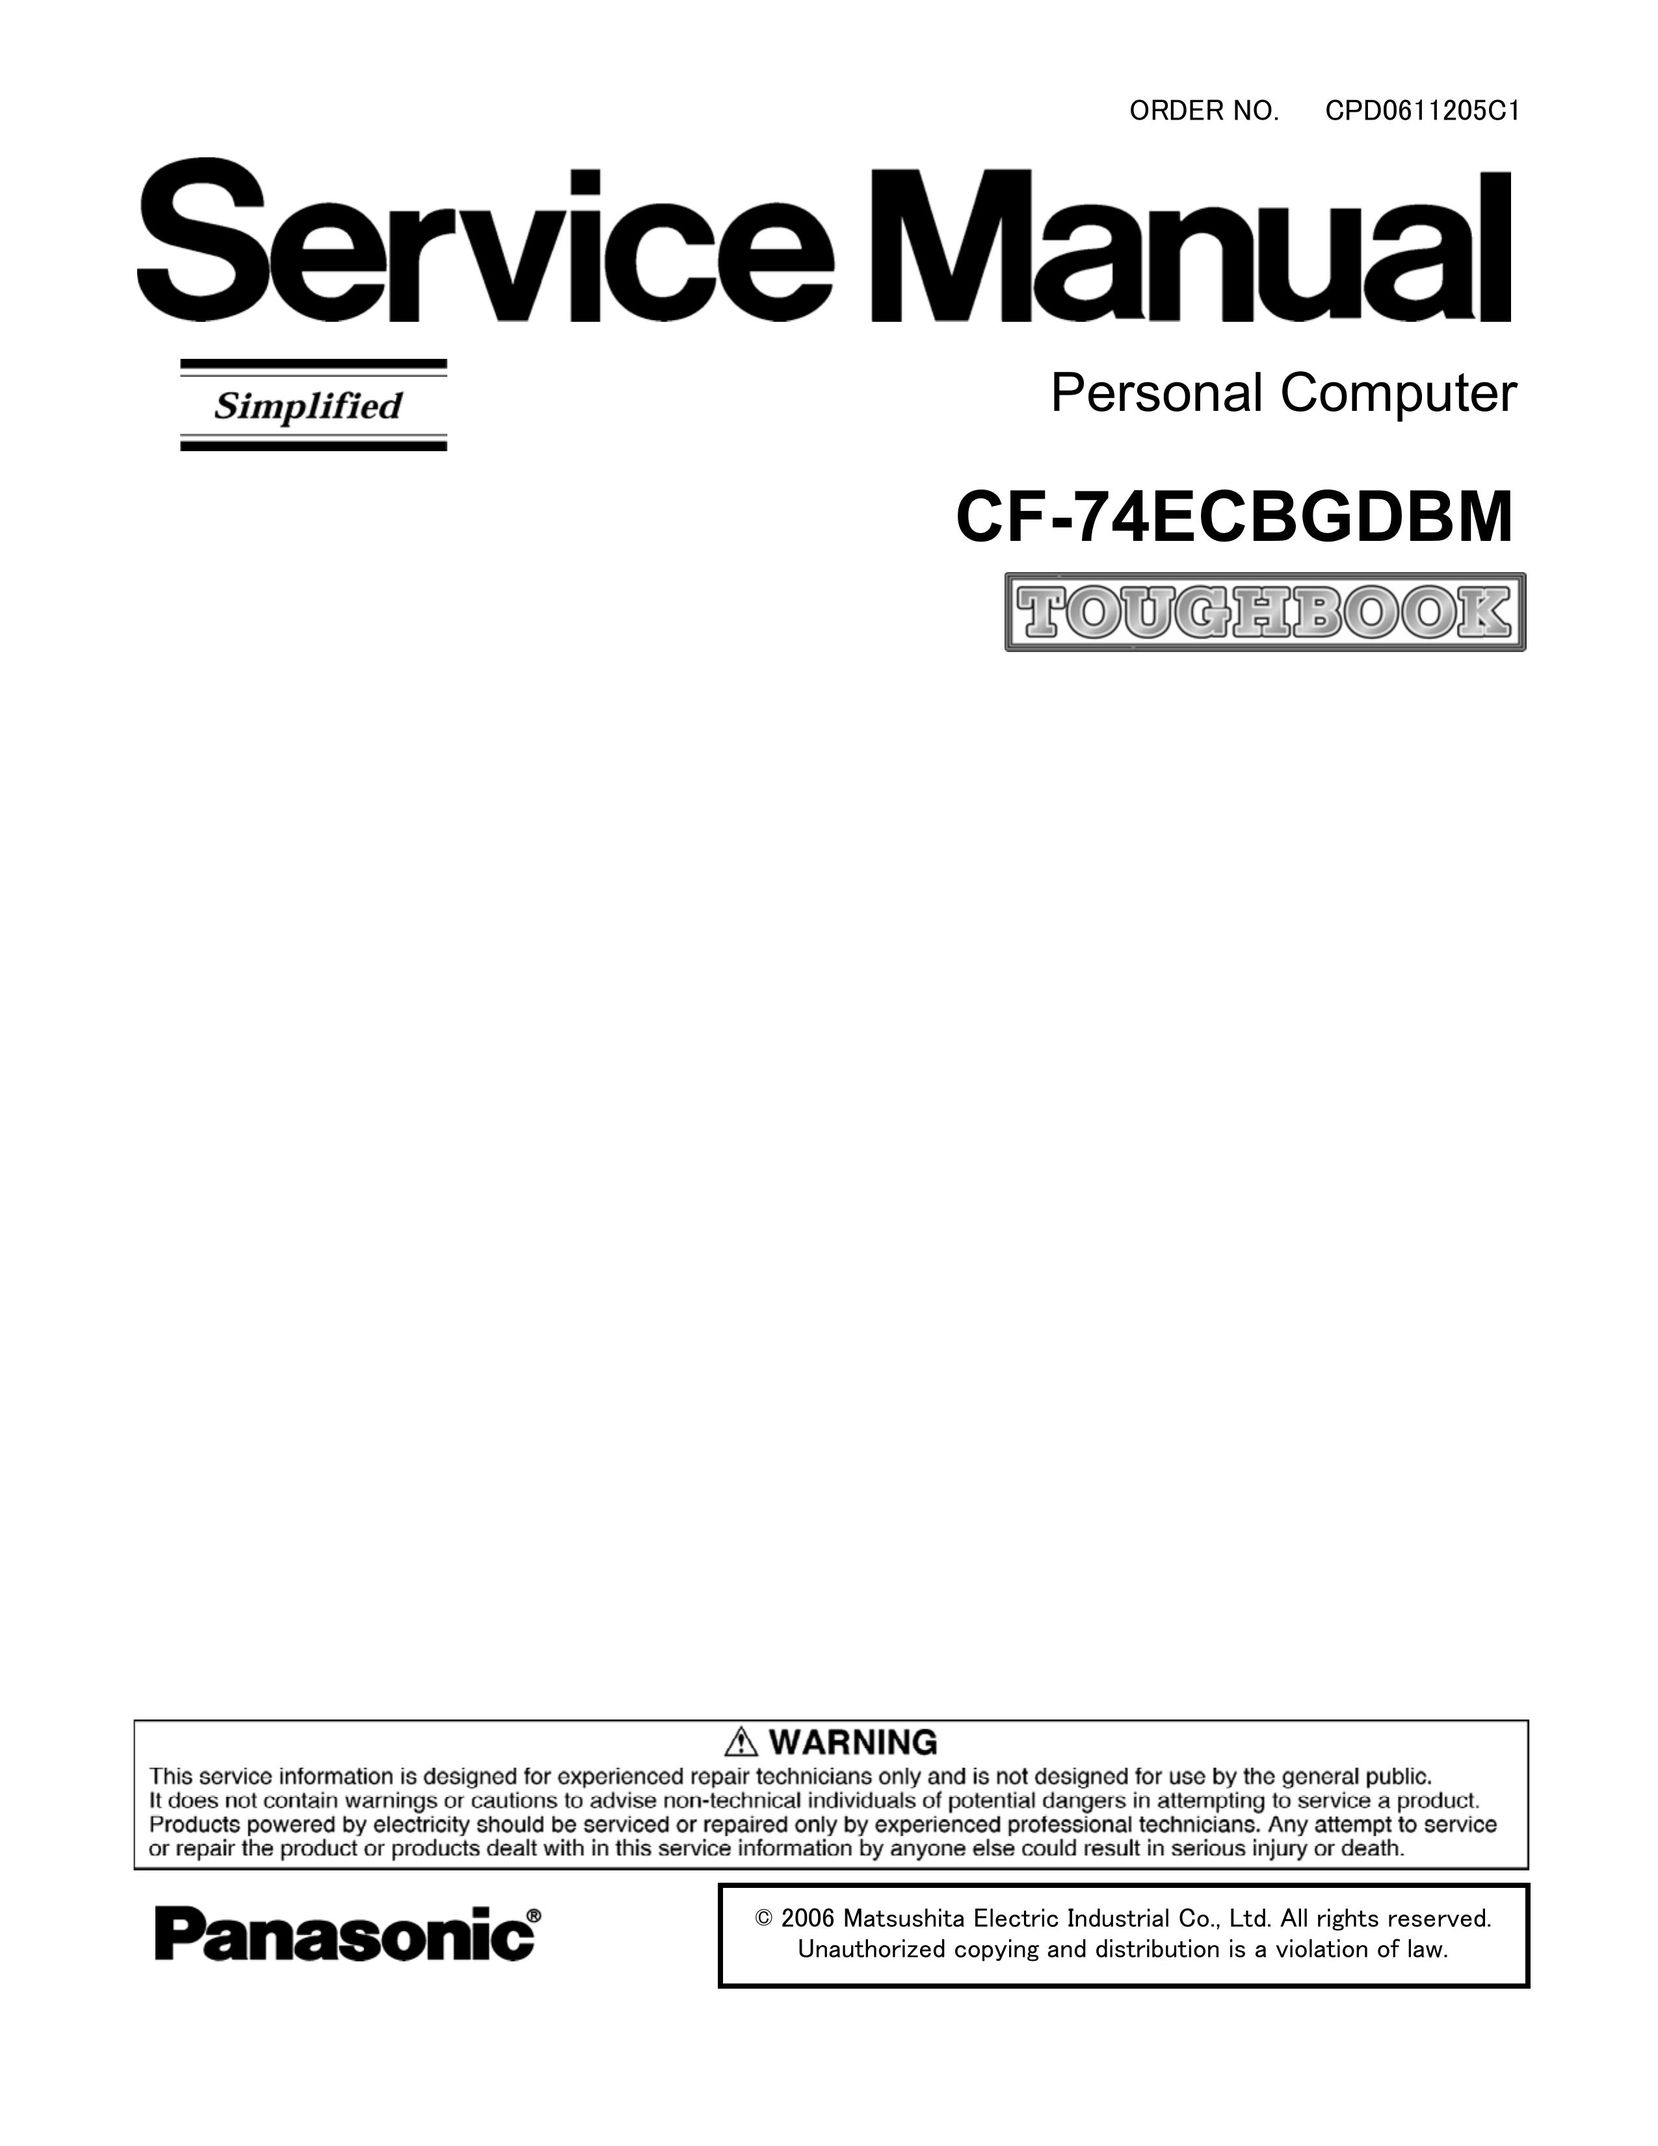 Panasonic CF-74ECBGDBM Personal Computer User Manual